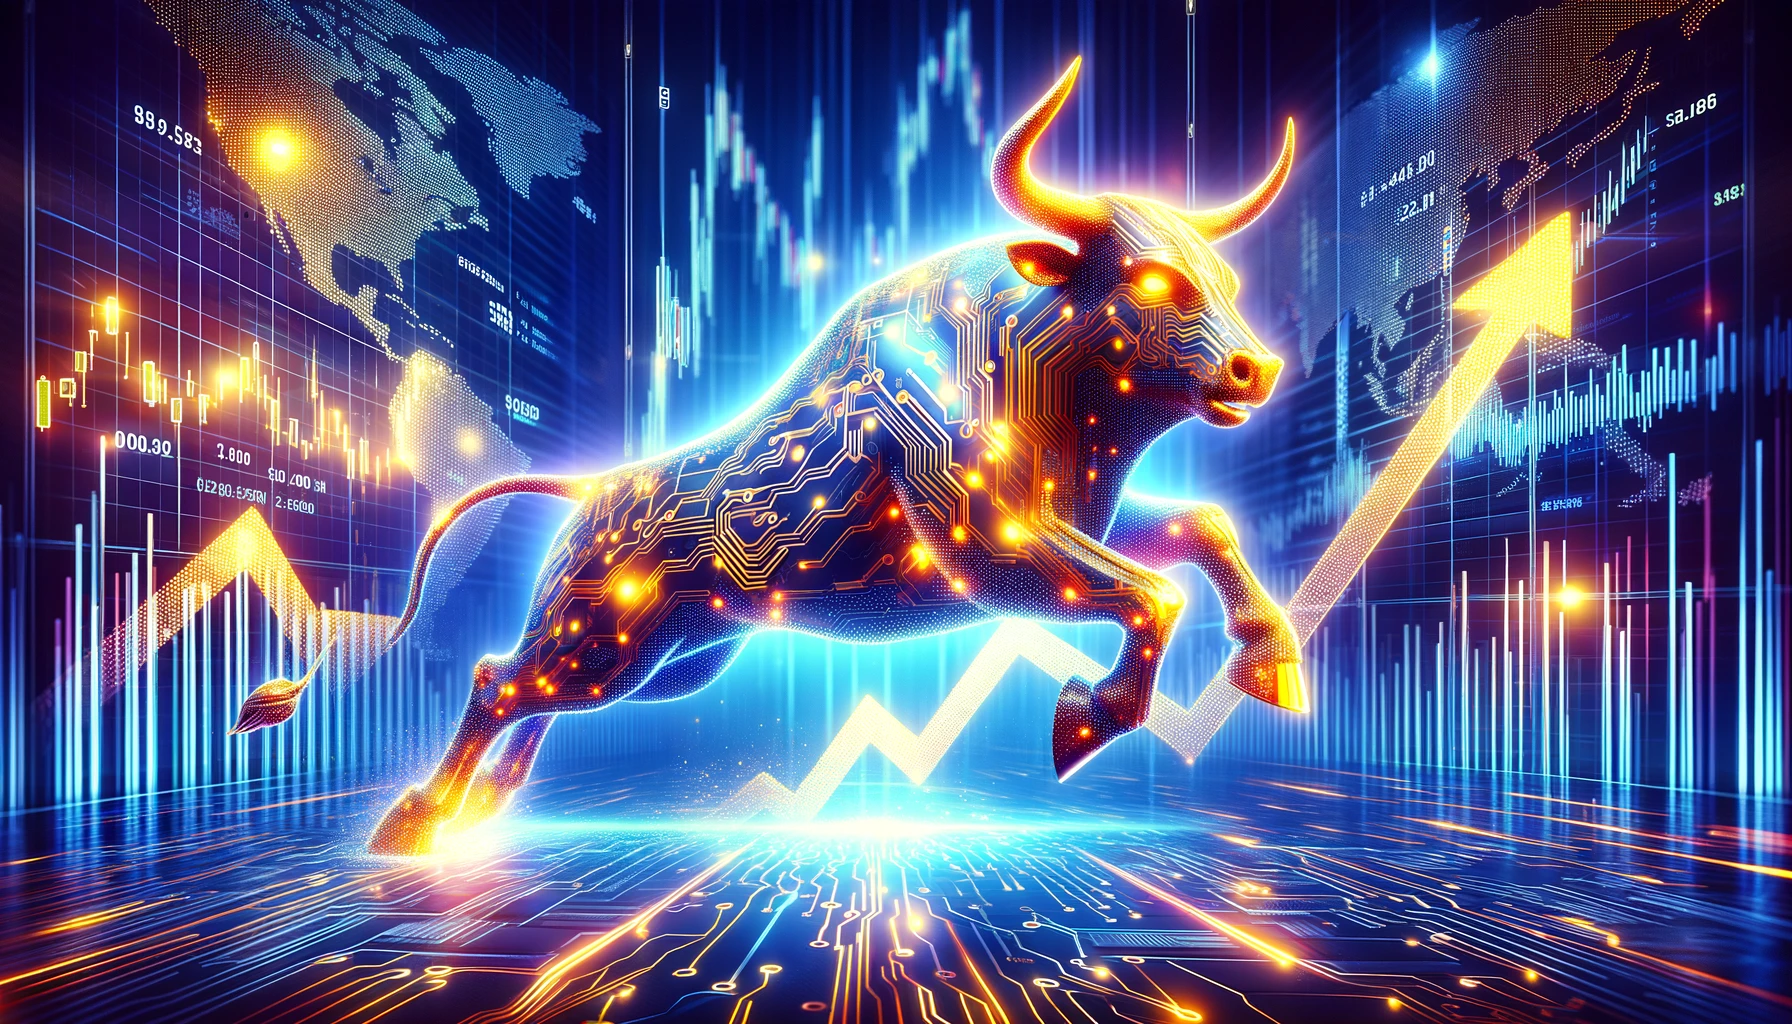 Buy Now, Crypto Bull Market Returns, Says Arthur Hayes